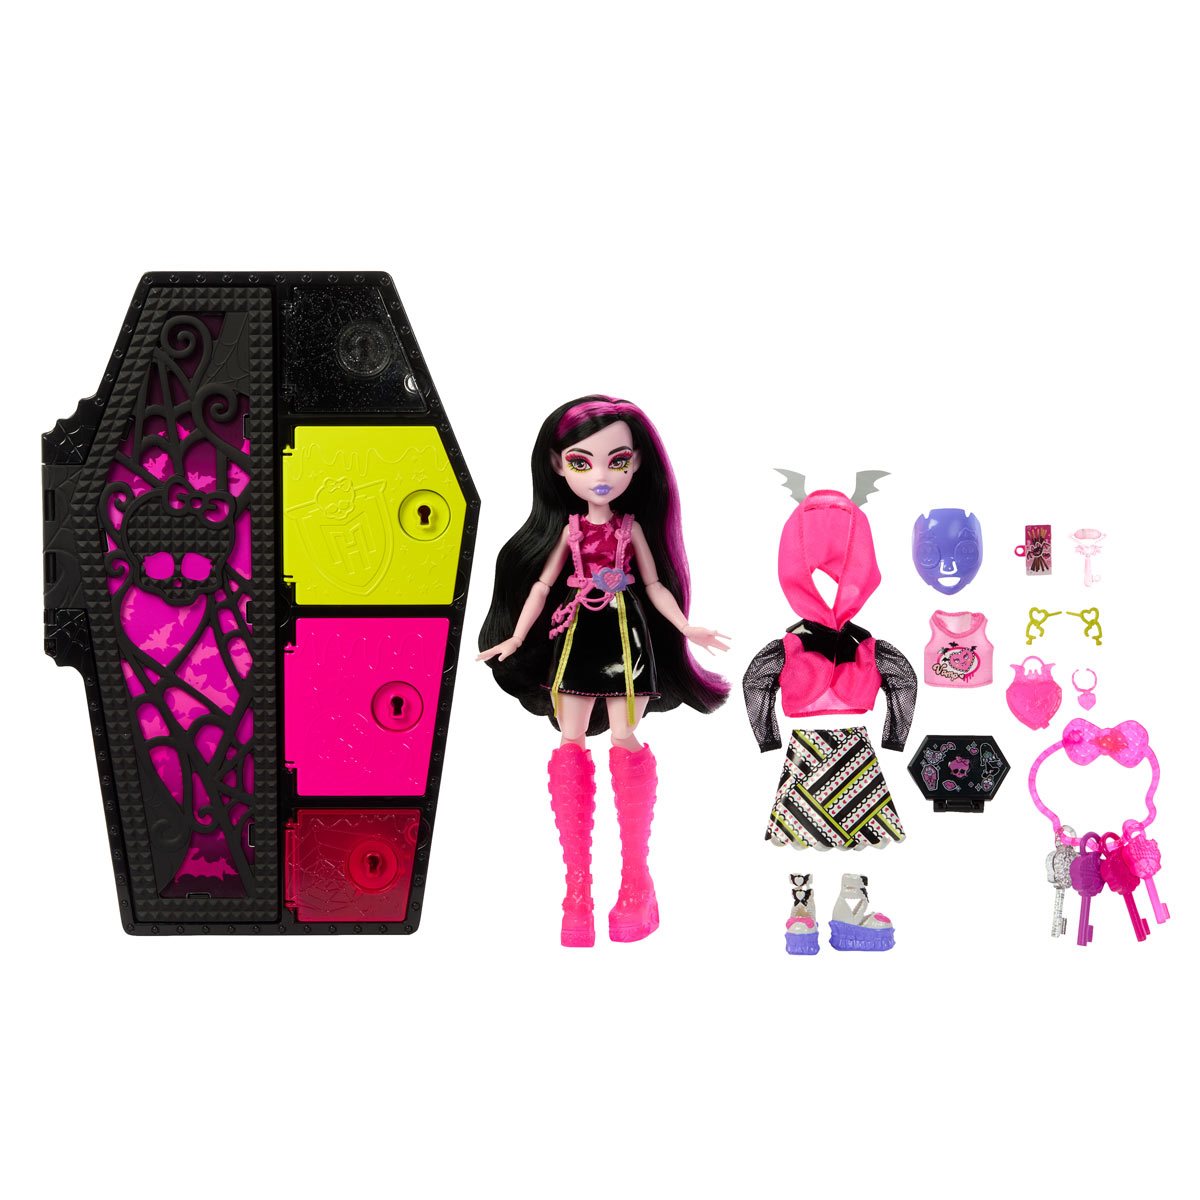 Monster High Draculaura Doll - Entertainment Earth